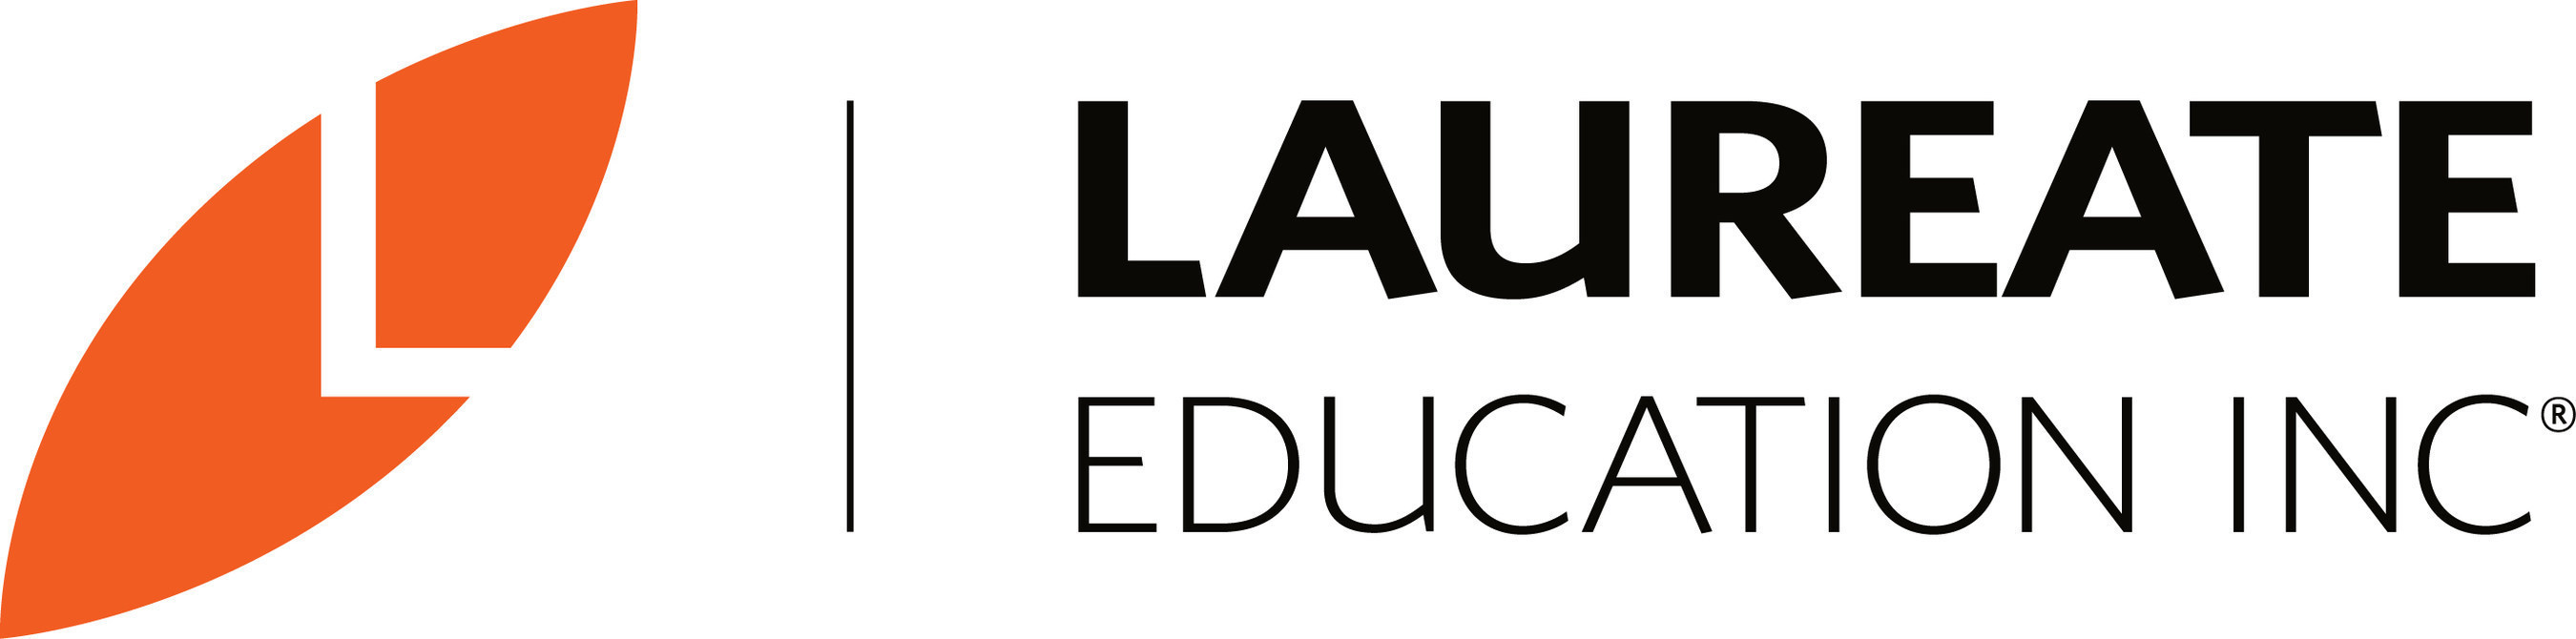 Laureate Education INC logo